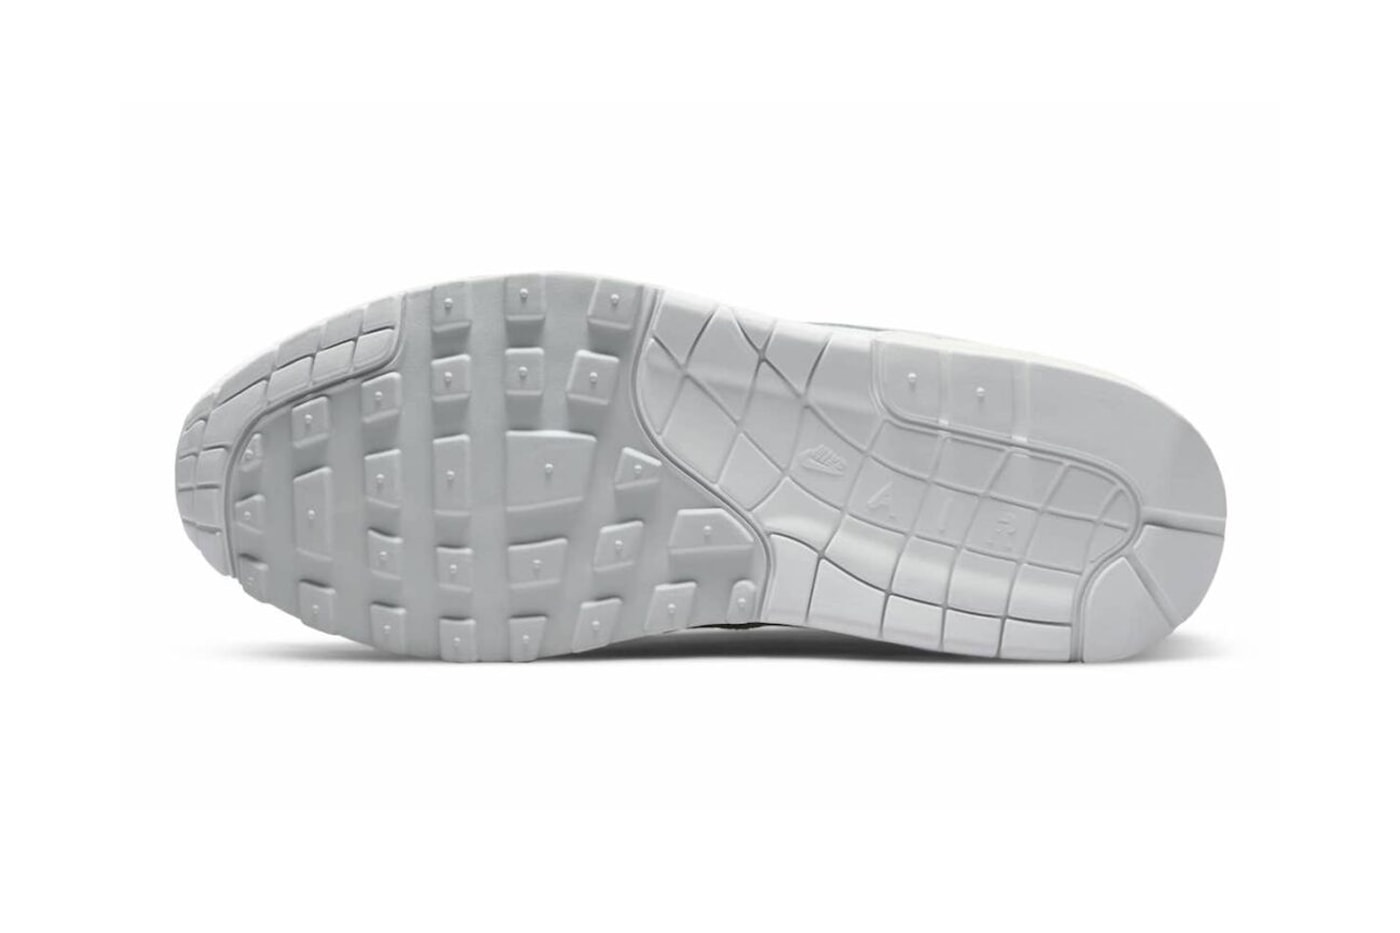 Patta x Nike Air Max 1 “White” Release Date | Hypebeast